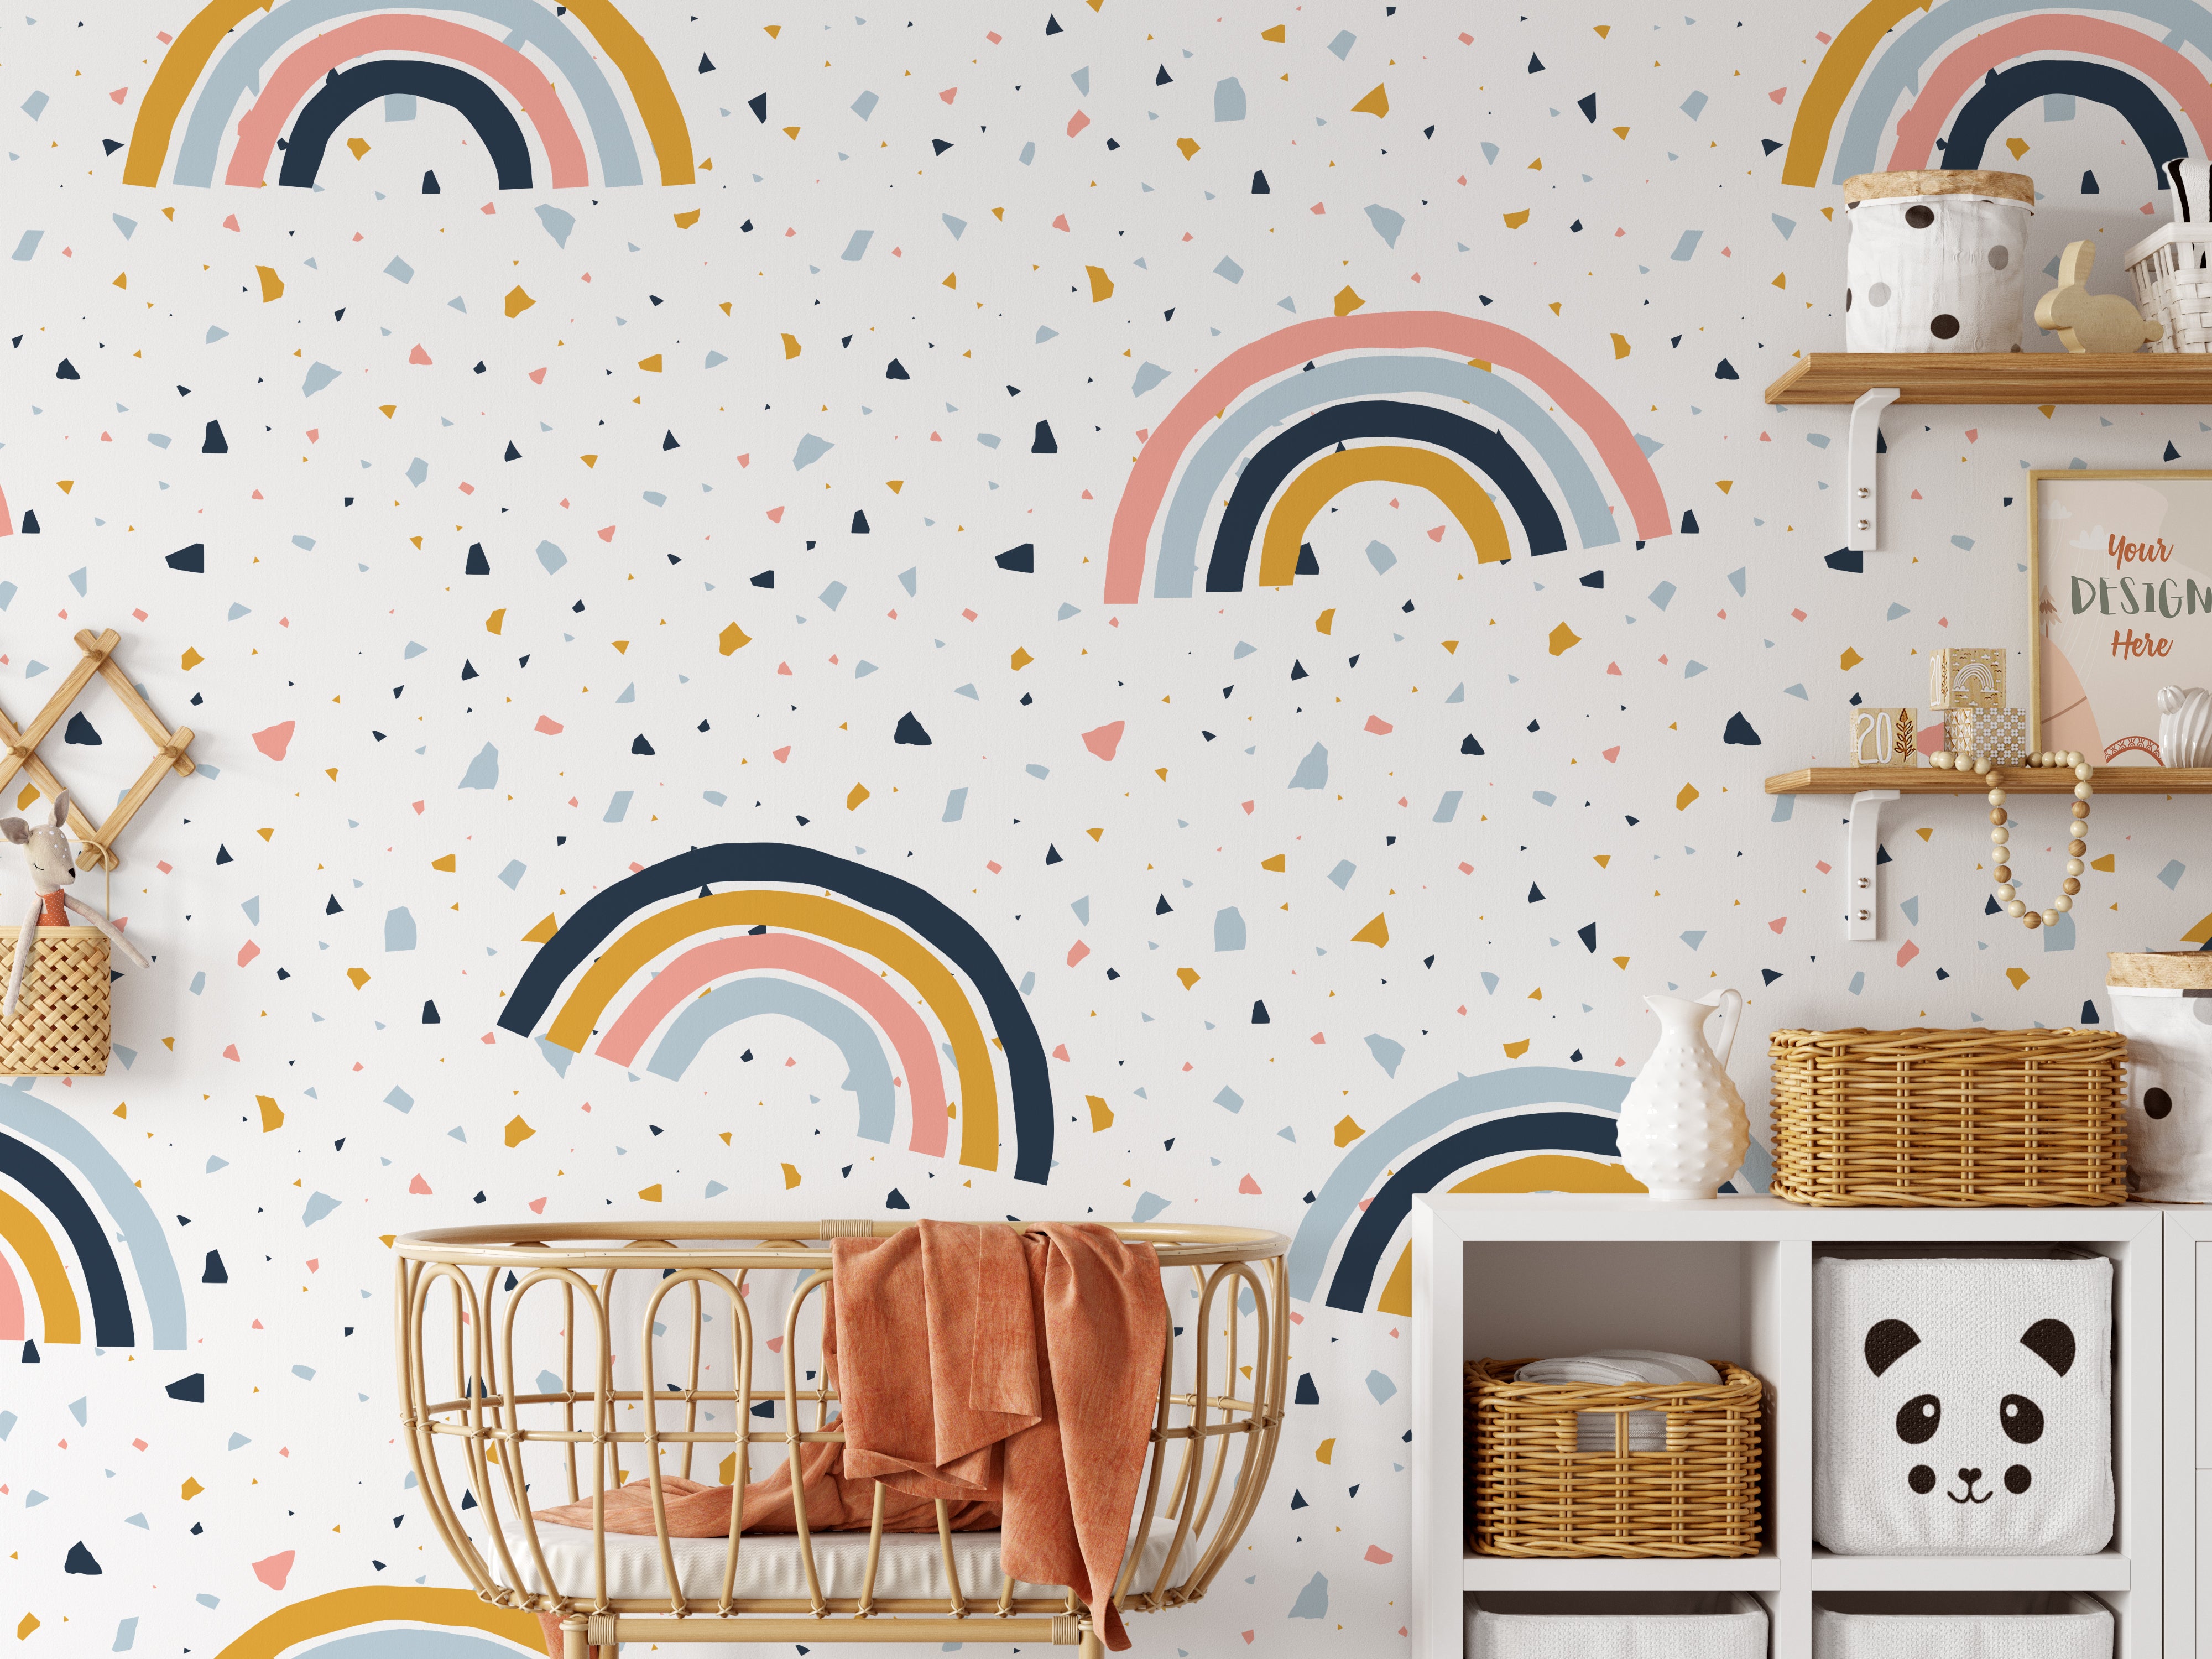 Funfetti Wallpaper - Wall Blush from WALL BLUSH